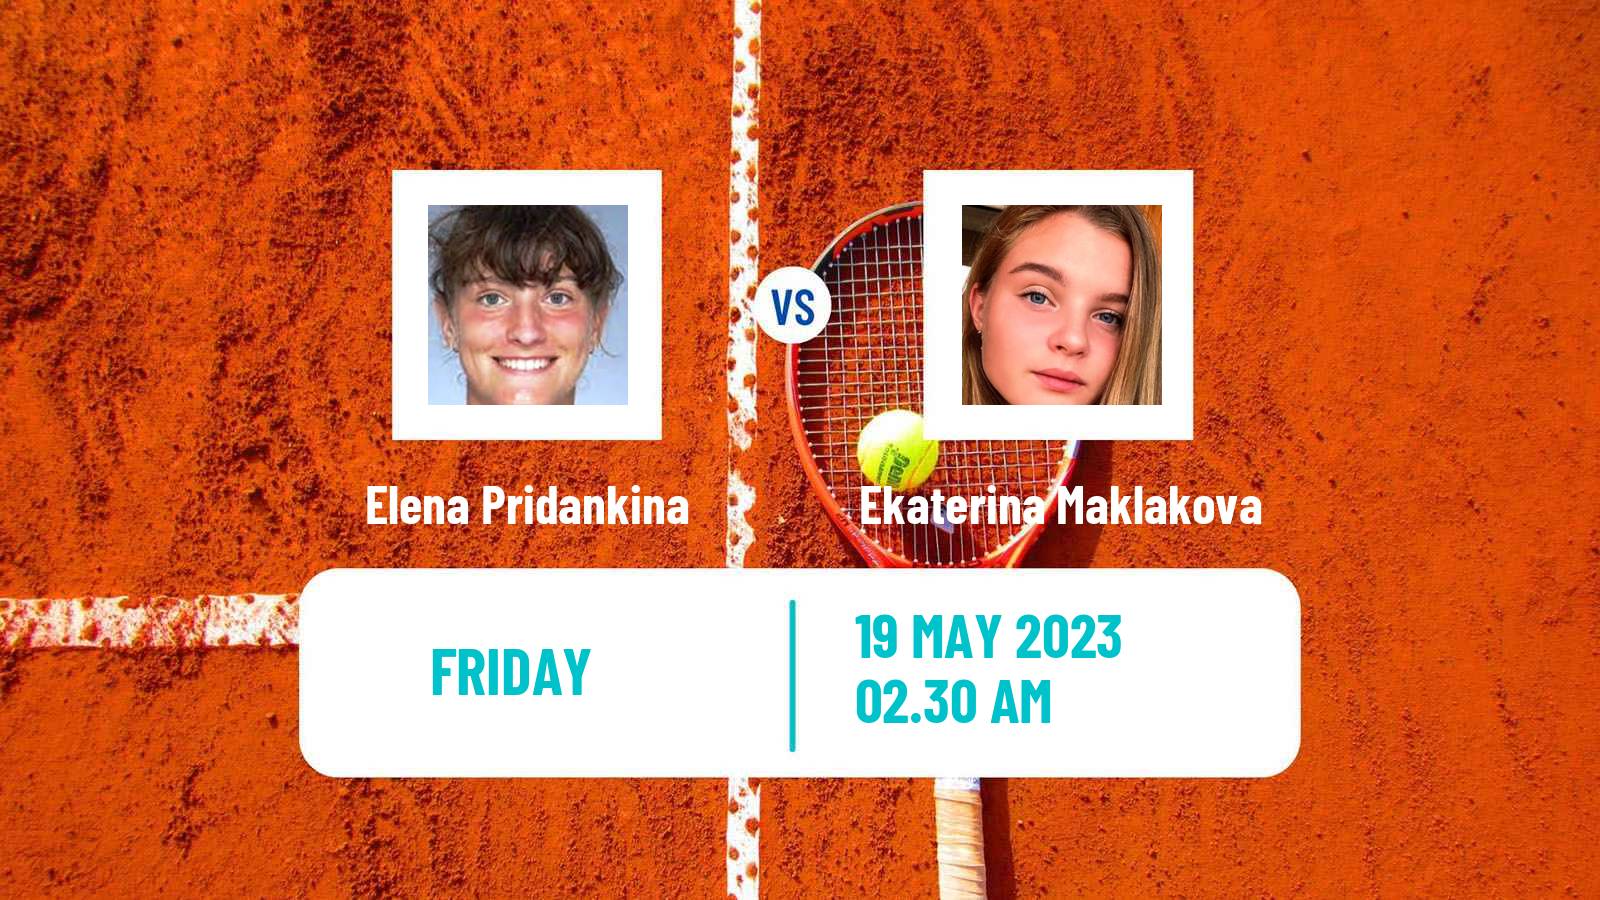 Tennis ITF W25 Kachreti 2 Women Elena Pridankina - Ekaterina Maklakova